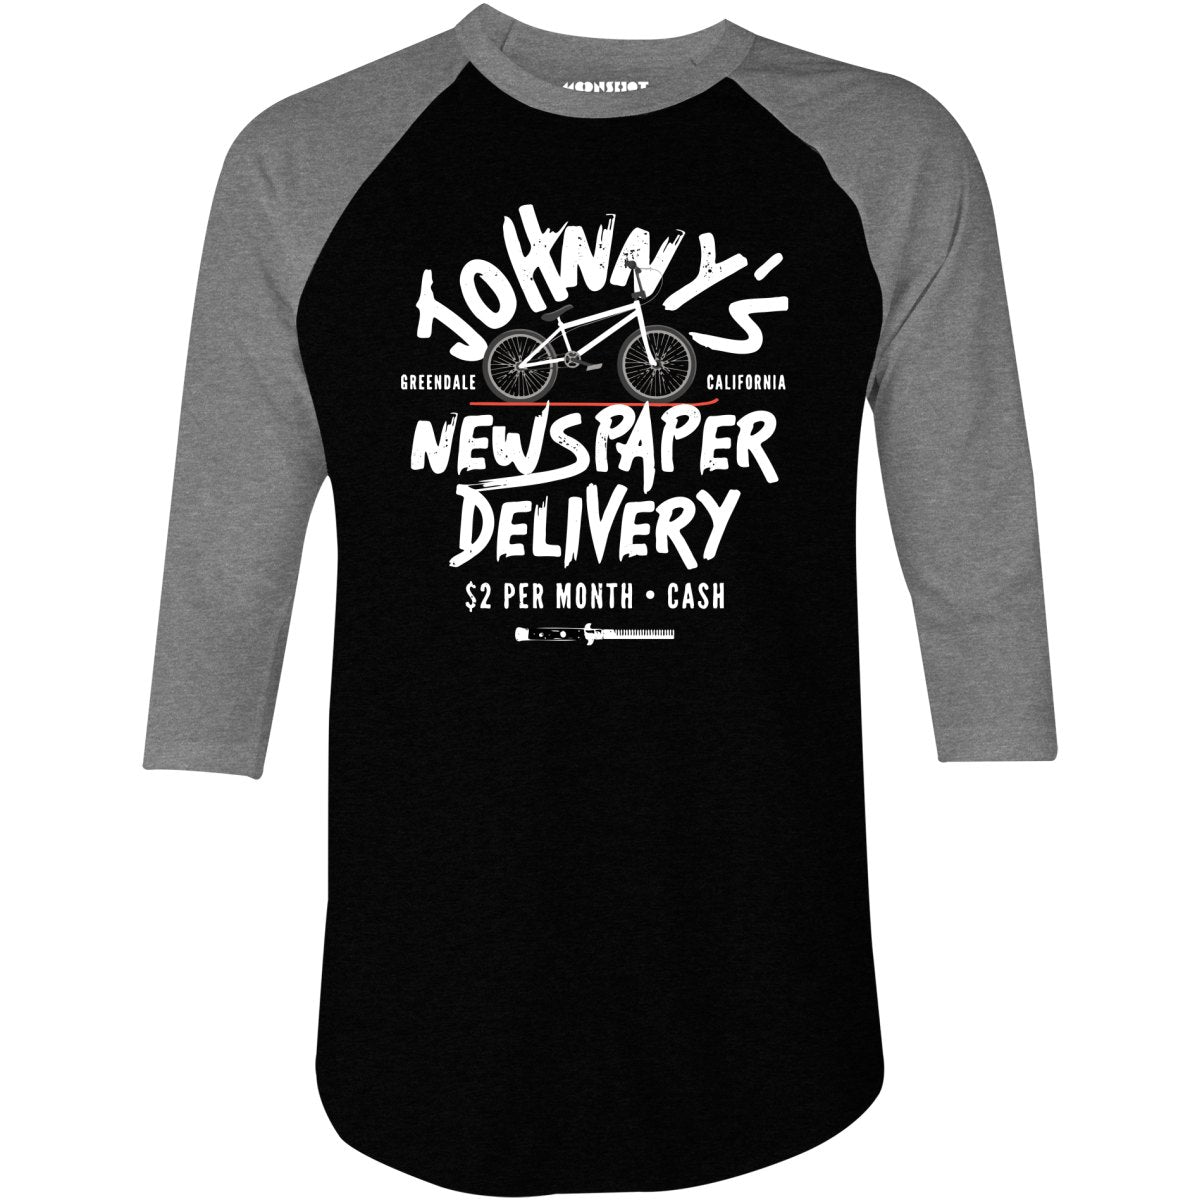 Johnny's Newspaper Delivery - 3/4 Sleeve Raglan T-Shirt